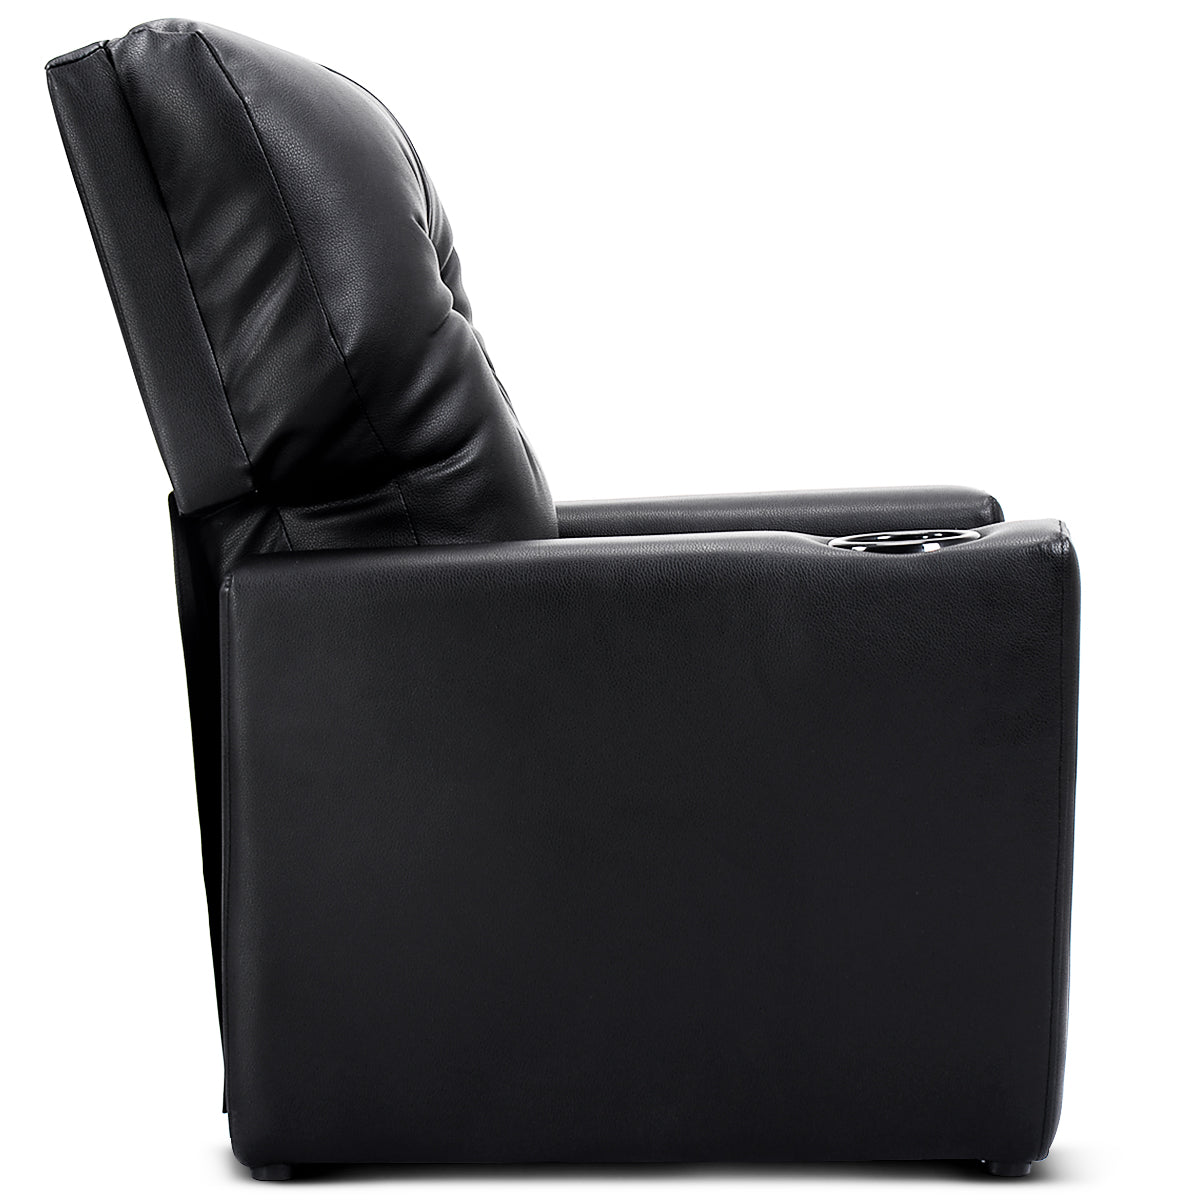 Adjustable Children's Lounge Chair: High Backrest and Armrest - Classic Black